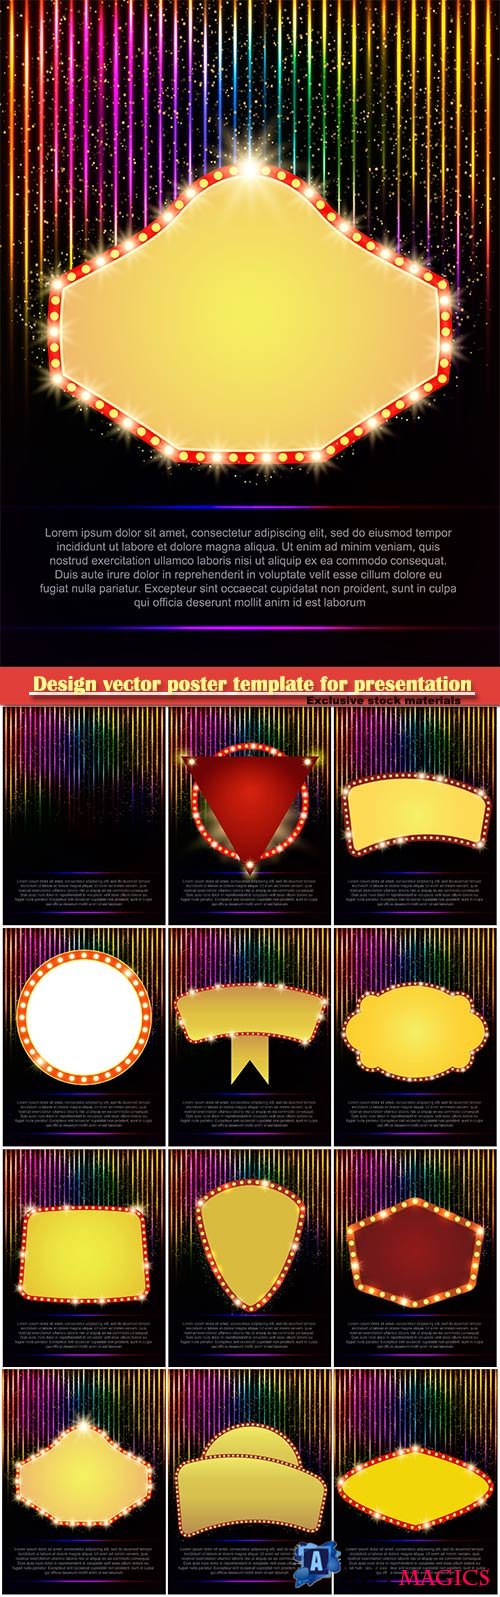 Design vector poster template for presentation, concert, show, retro banner